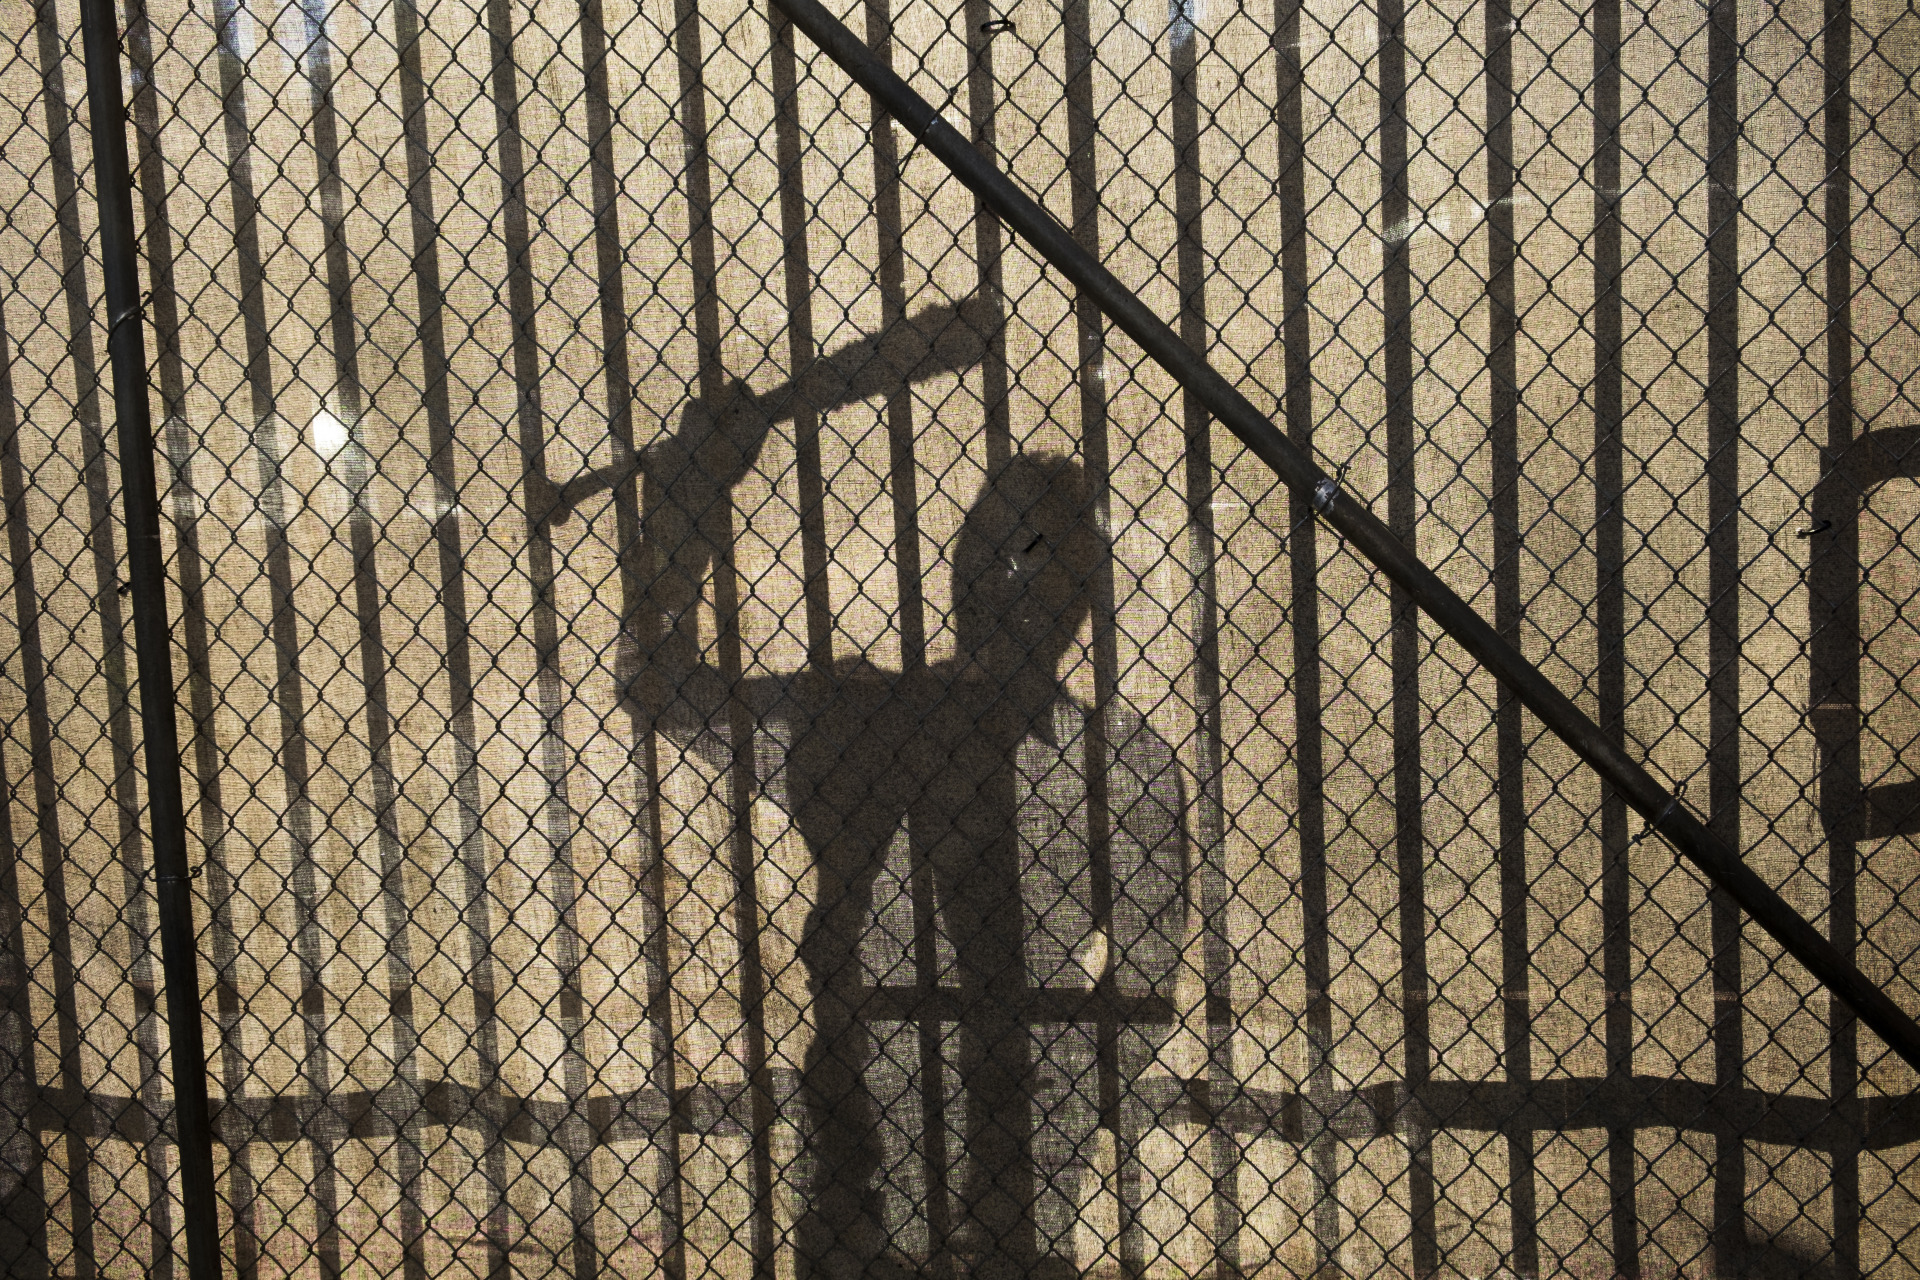 People 1920x1280 twd baseball bat TV series shadow Negan The Walking Dead Jeffrey Dean Morgan film stills